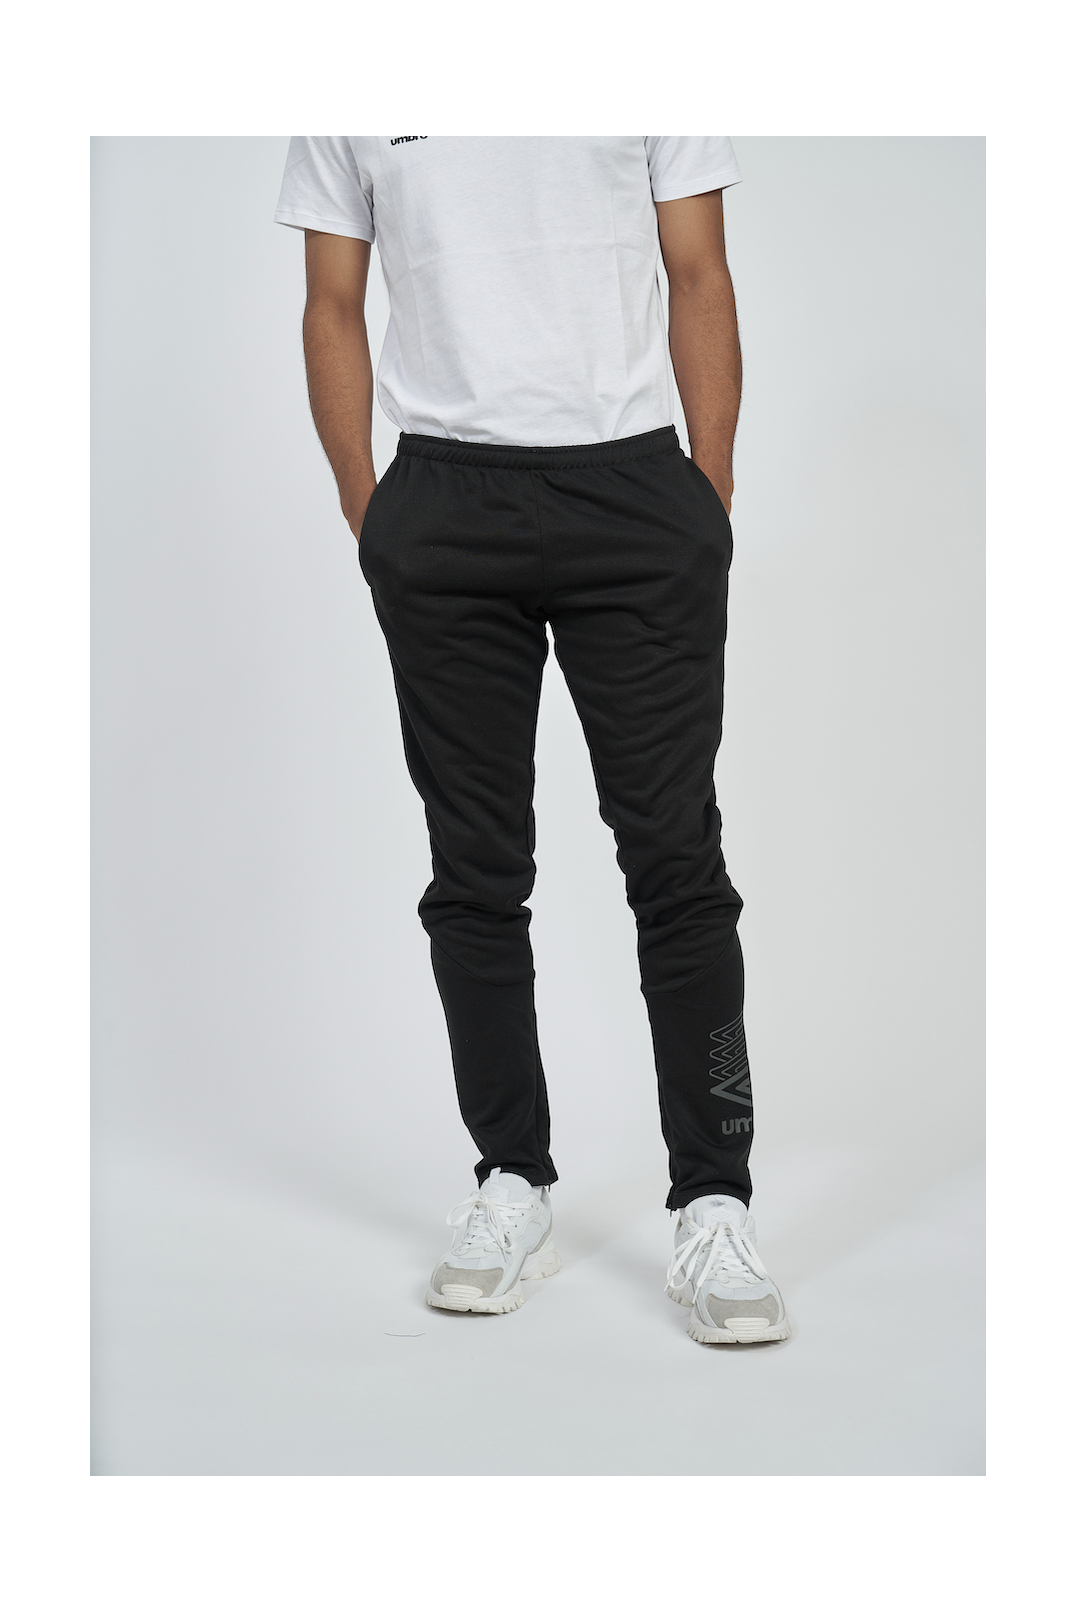 Pantalón Umbro Fw Sportswear Jogger Dark Navy / Brilliant White